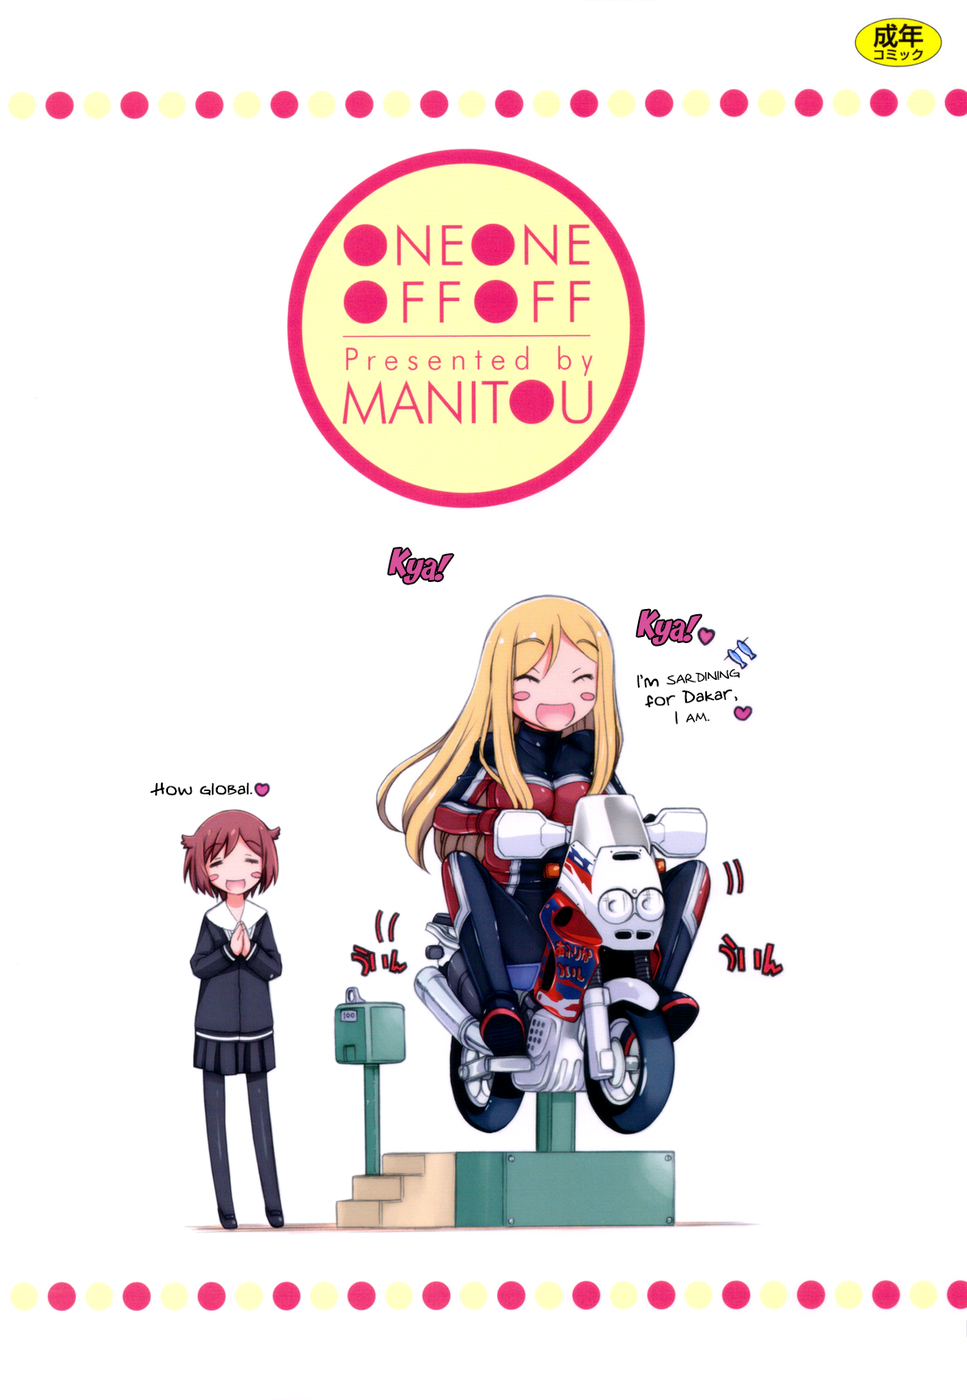 Hentai Manga Comic-One One Off Off-Read-26